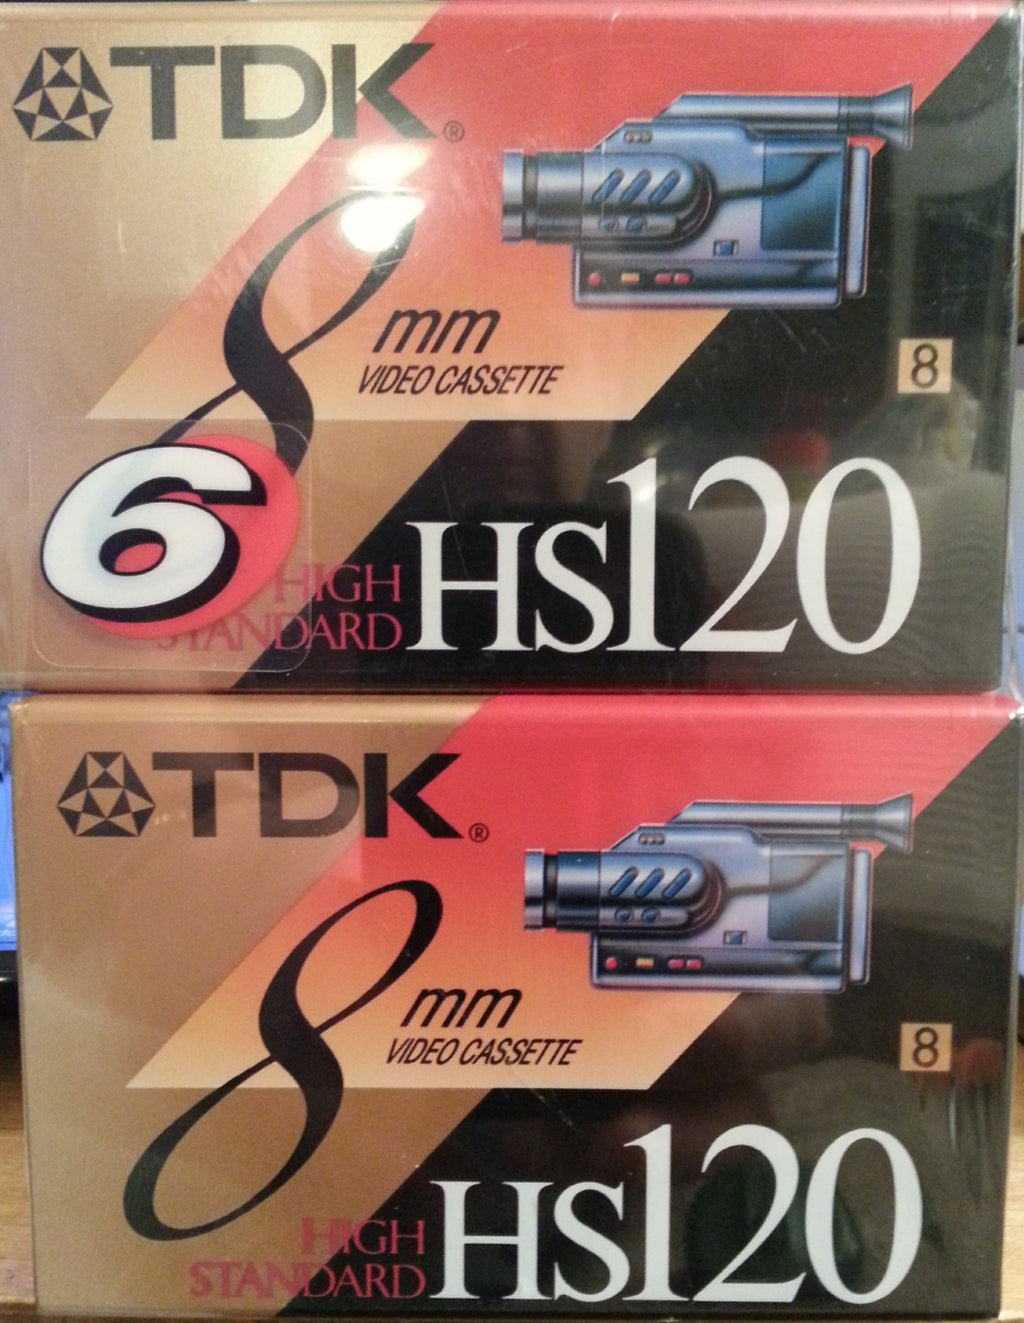 TDK 8mm Video Cassette HS 120 6 pack